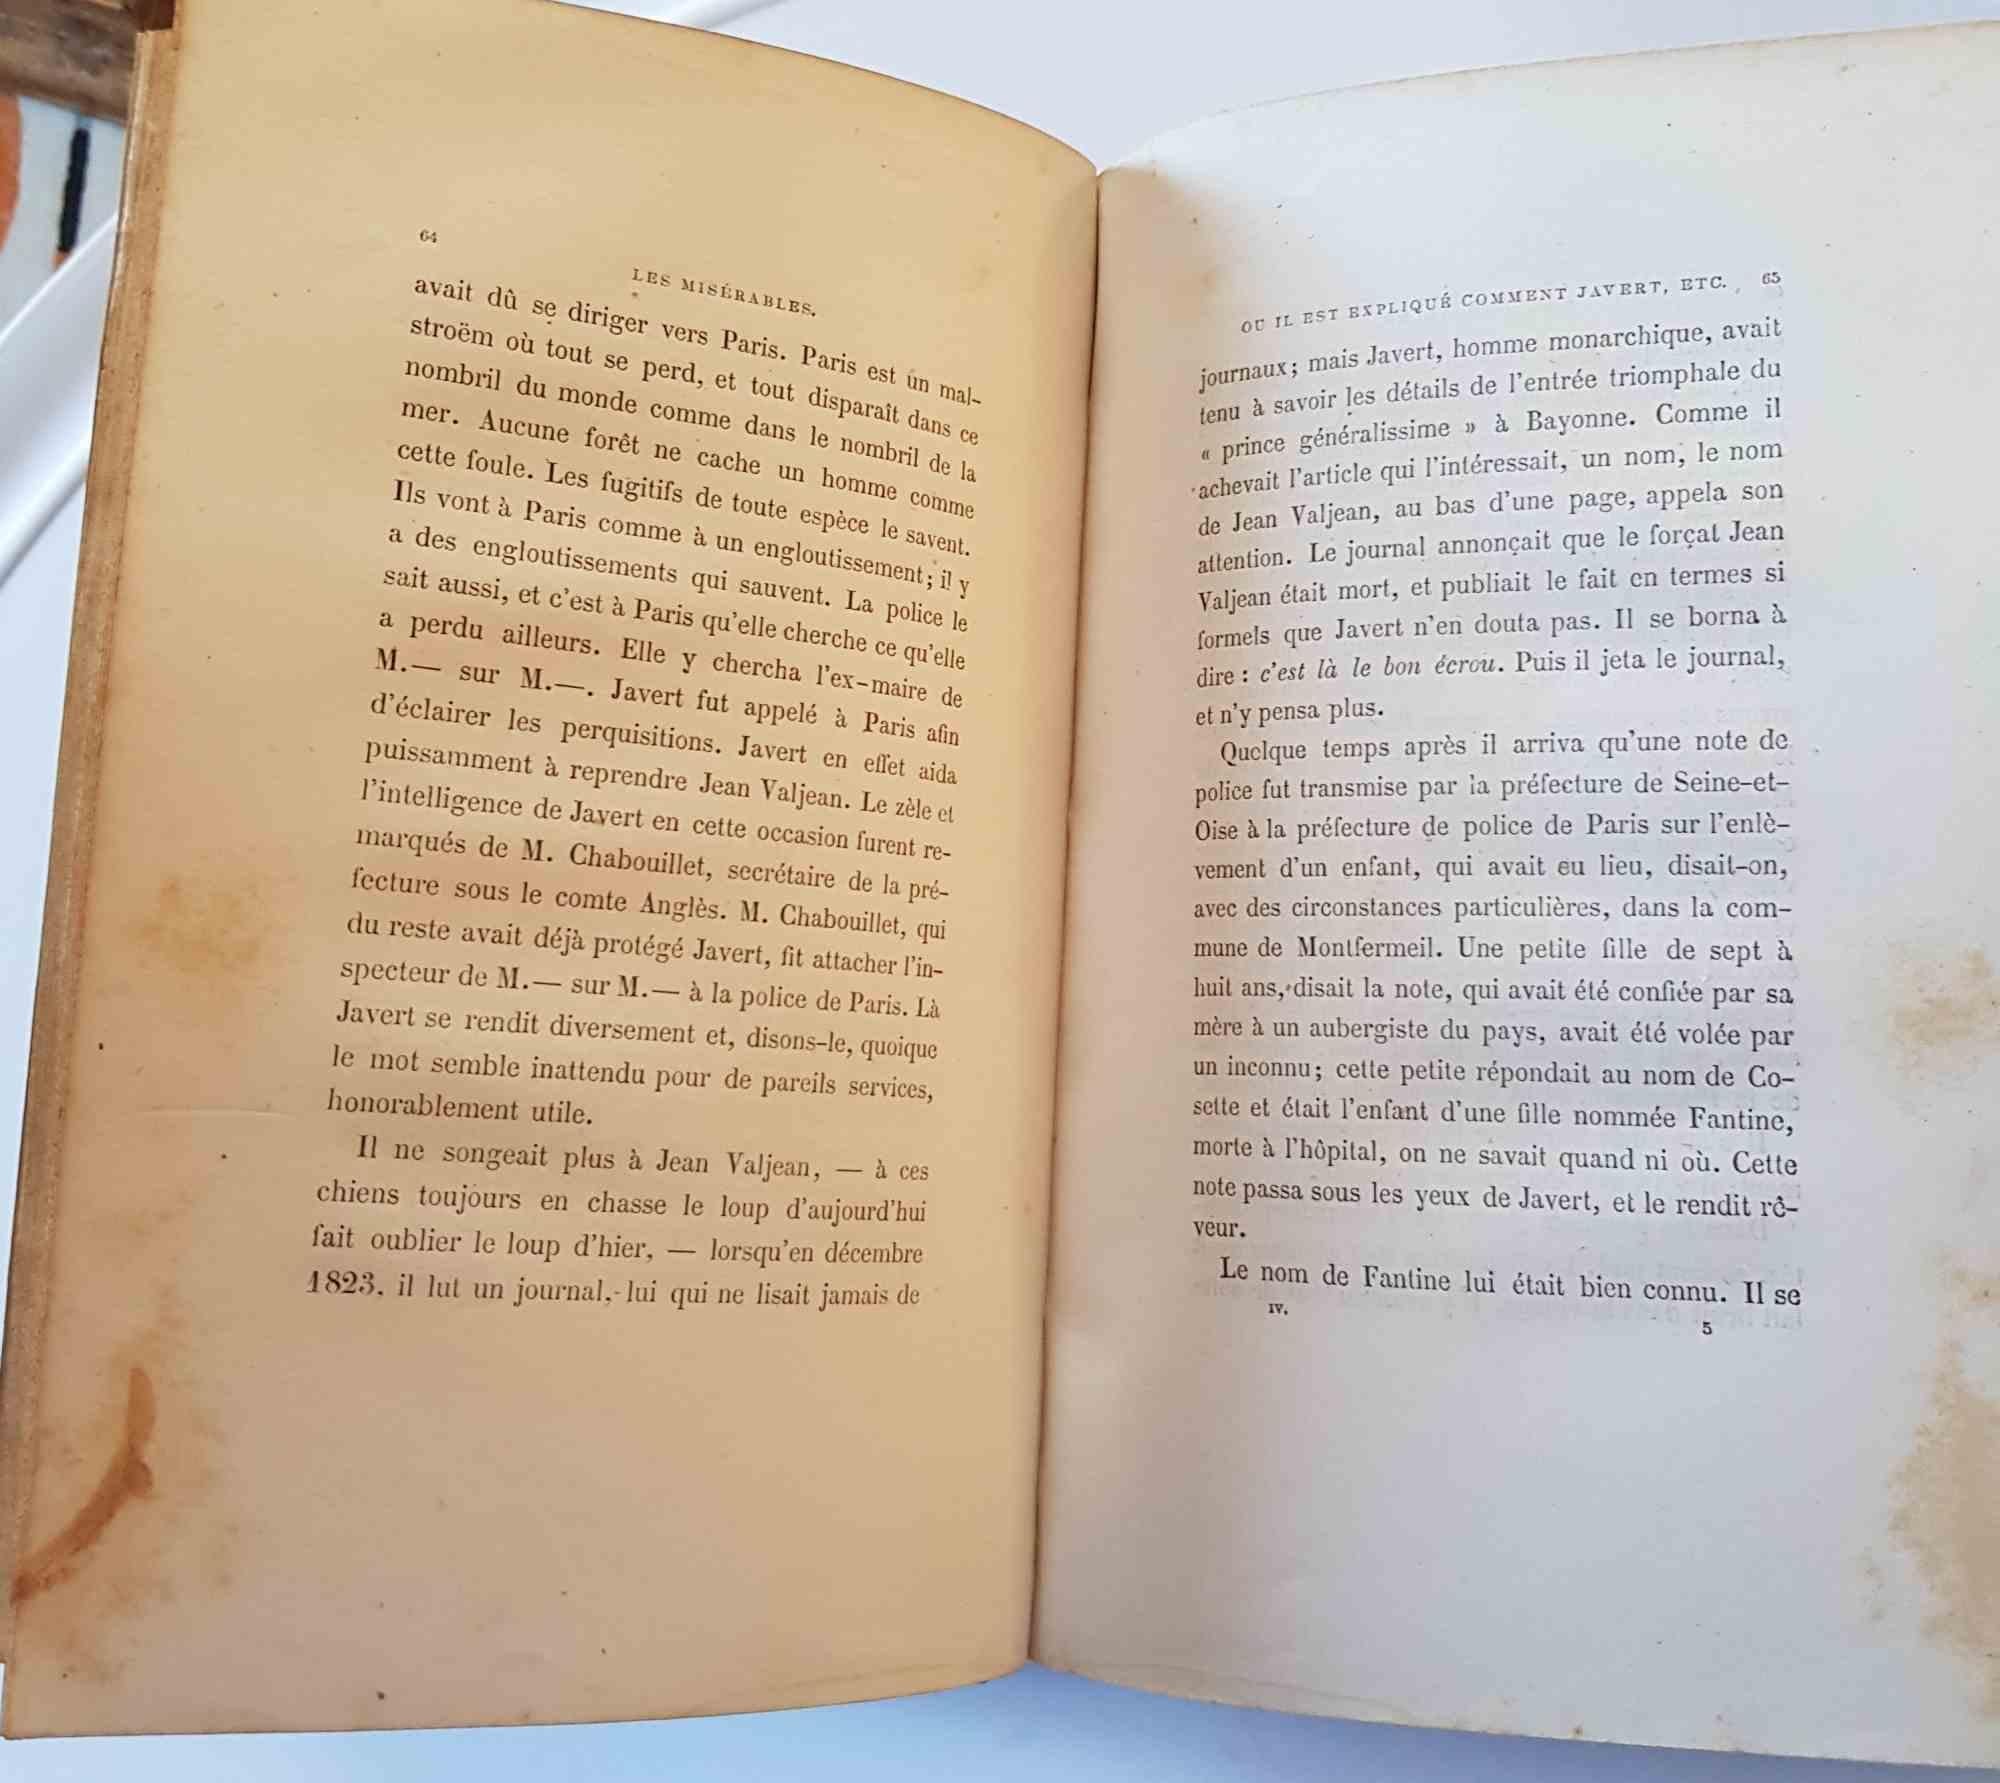 Les Misérables - Rare Book by Victor Hugo - 1862 For Sale 2